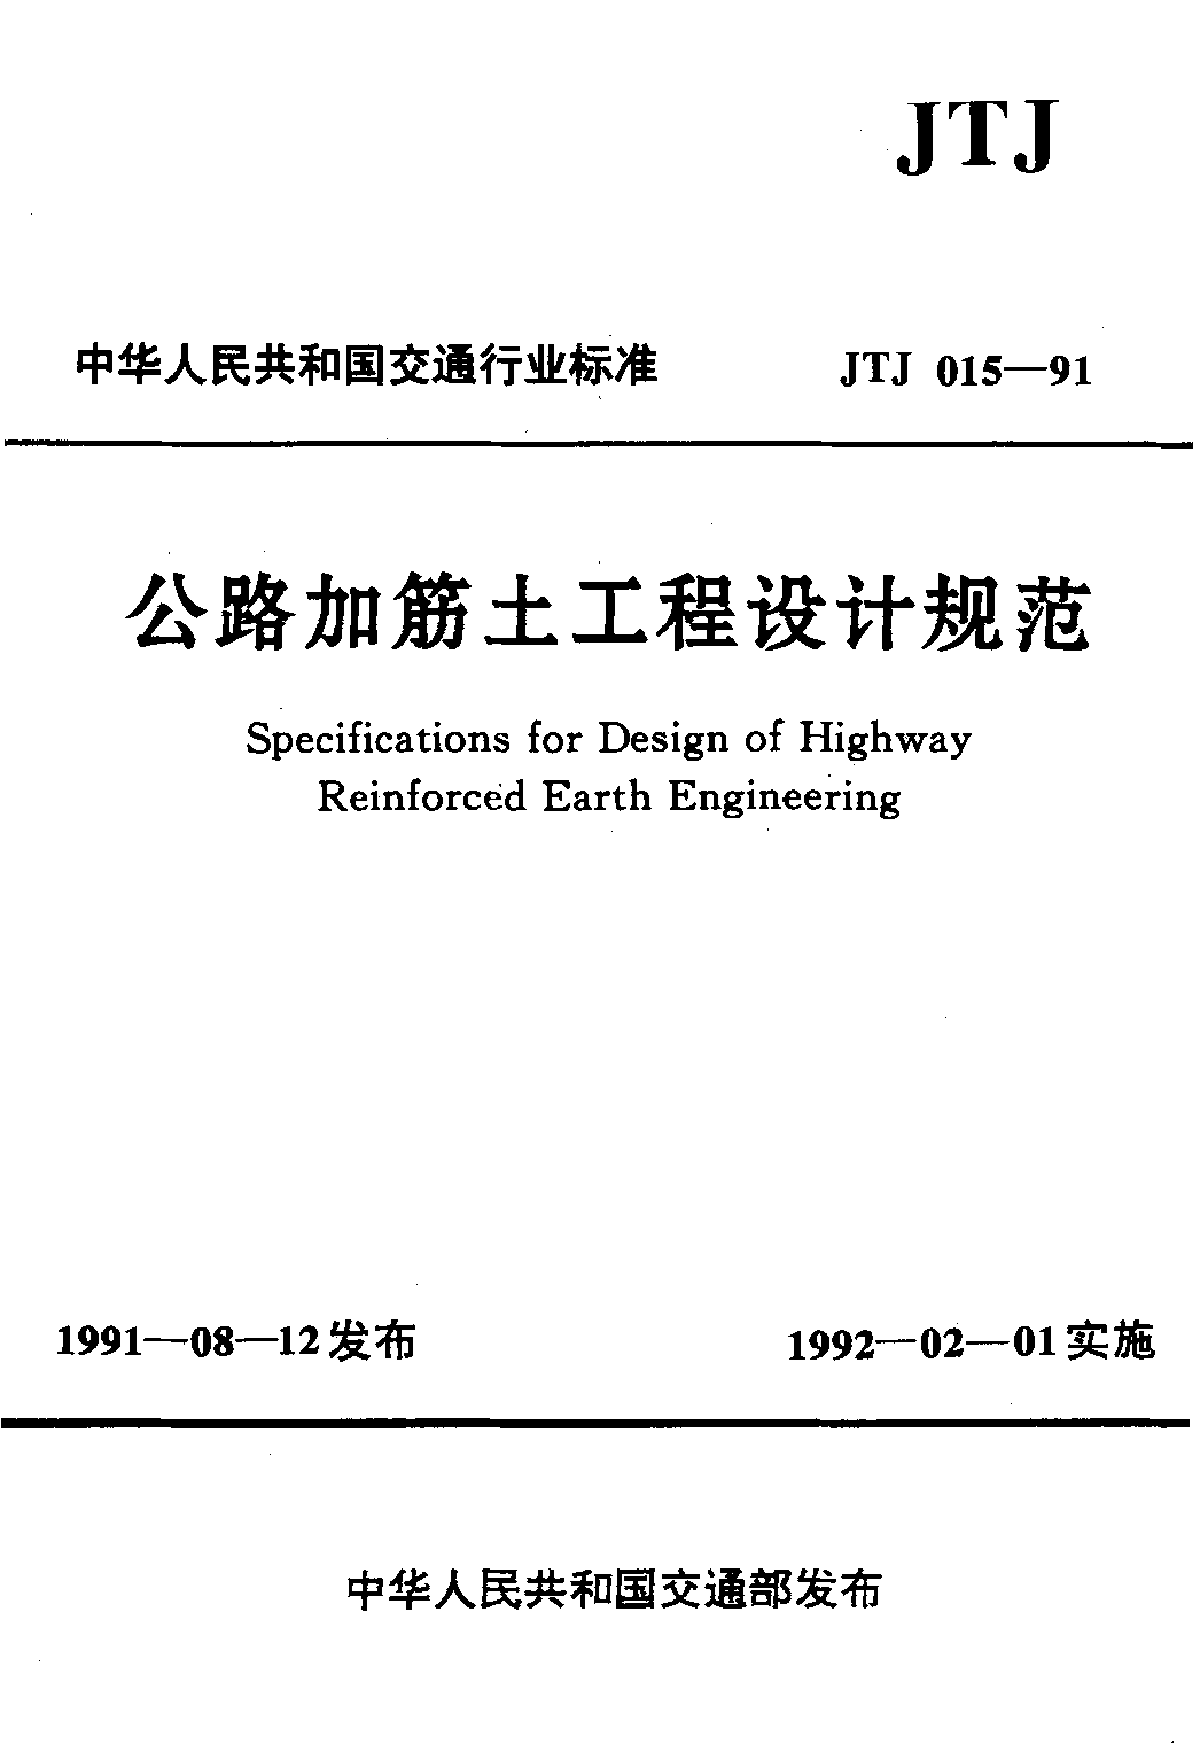 JTJ015-91公路加筋土工程设计规范